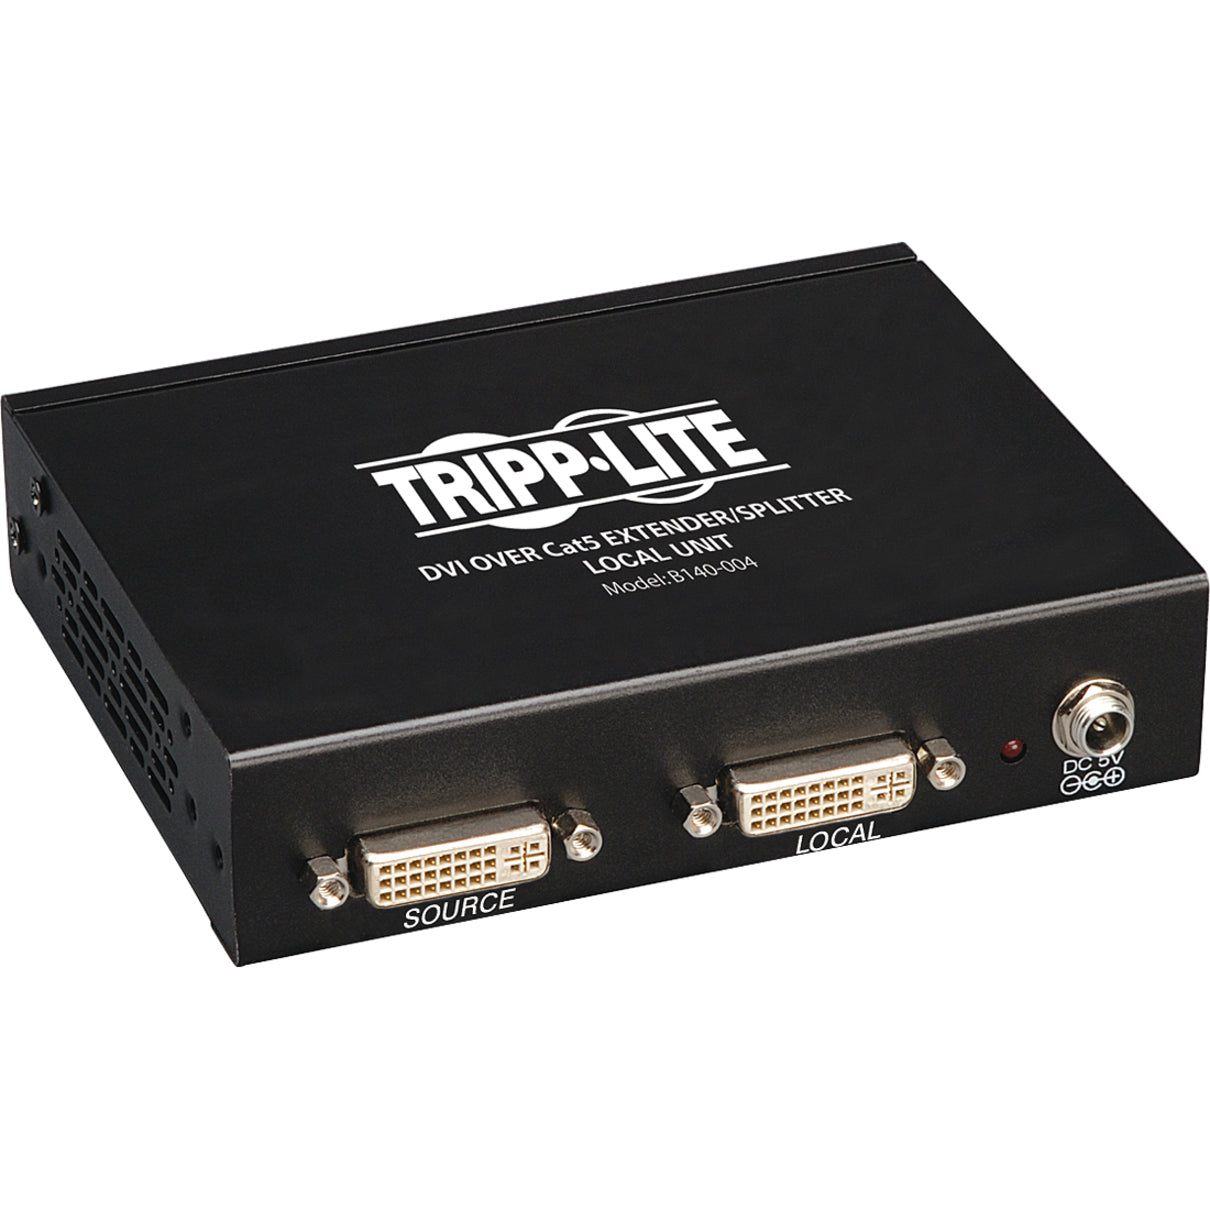 Tripp Lite > トリップライト B140-004 > B140-004 DVI over Cat5 Extender/Splitter > Cat5エクステンダー/スプリッター DVI 4-Port Local Transmitter Unit > 4ポートローカル送信機ユニット Full HD > フルHD 1920 x 1080 > 1920 x 1080 TAA Compliant > TAA準拠